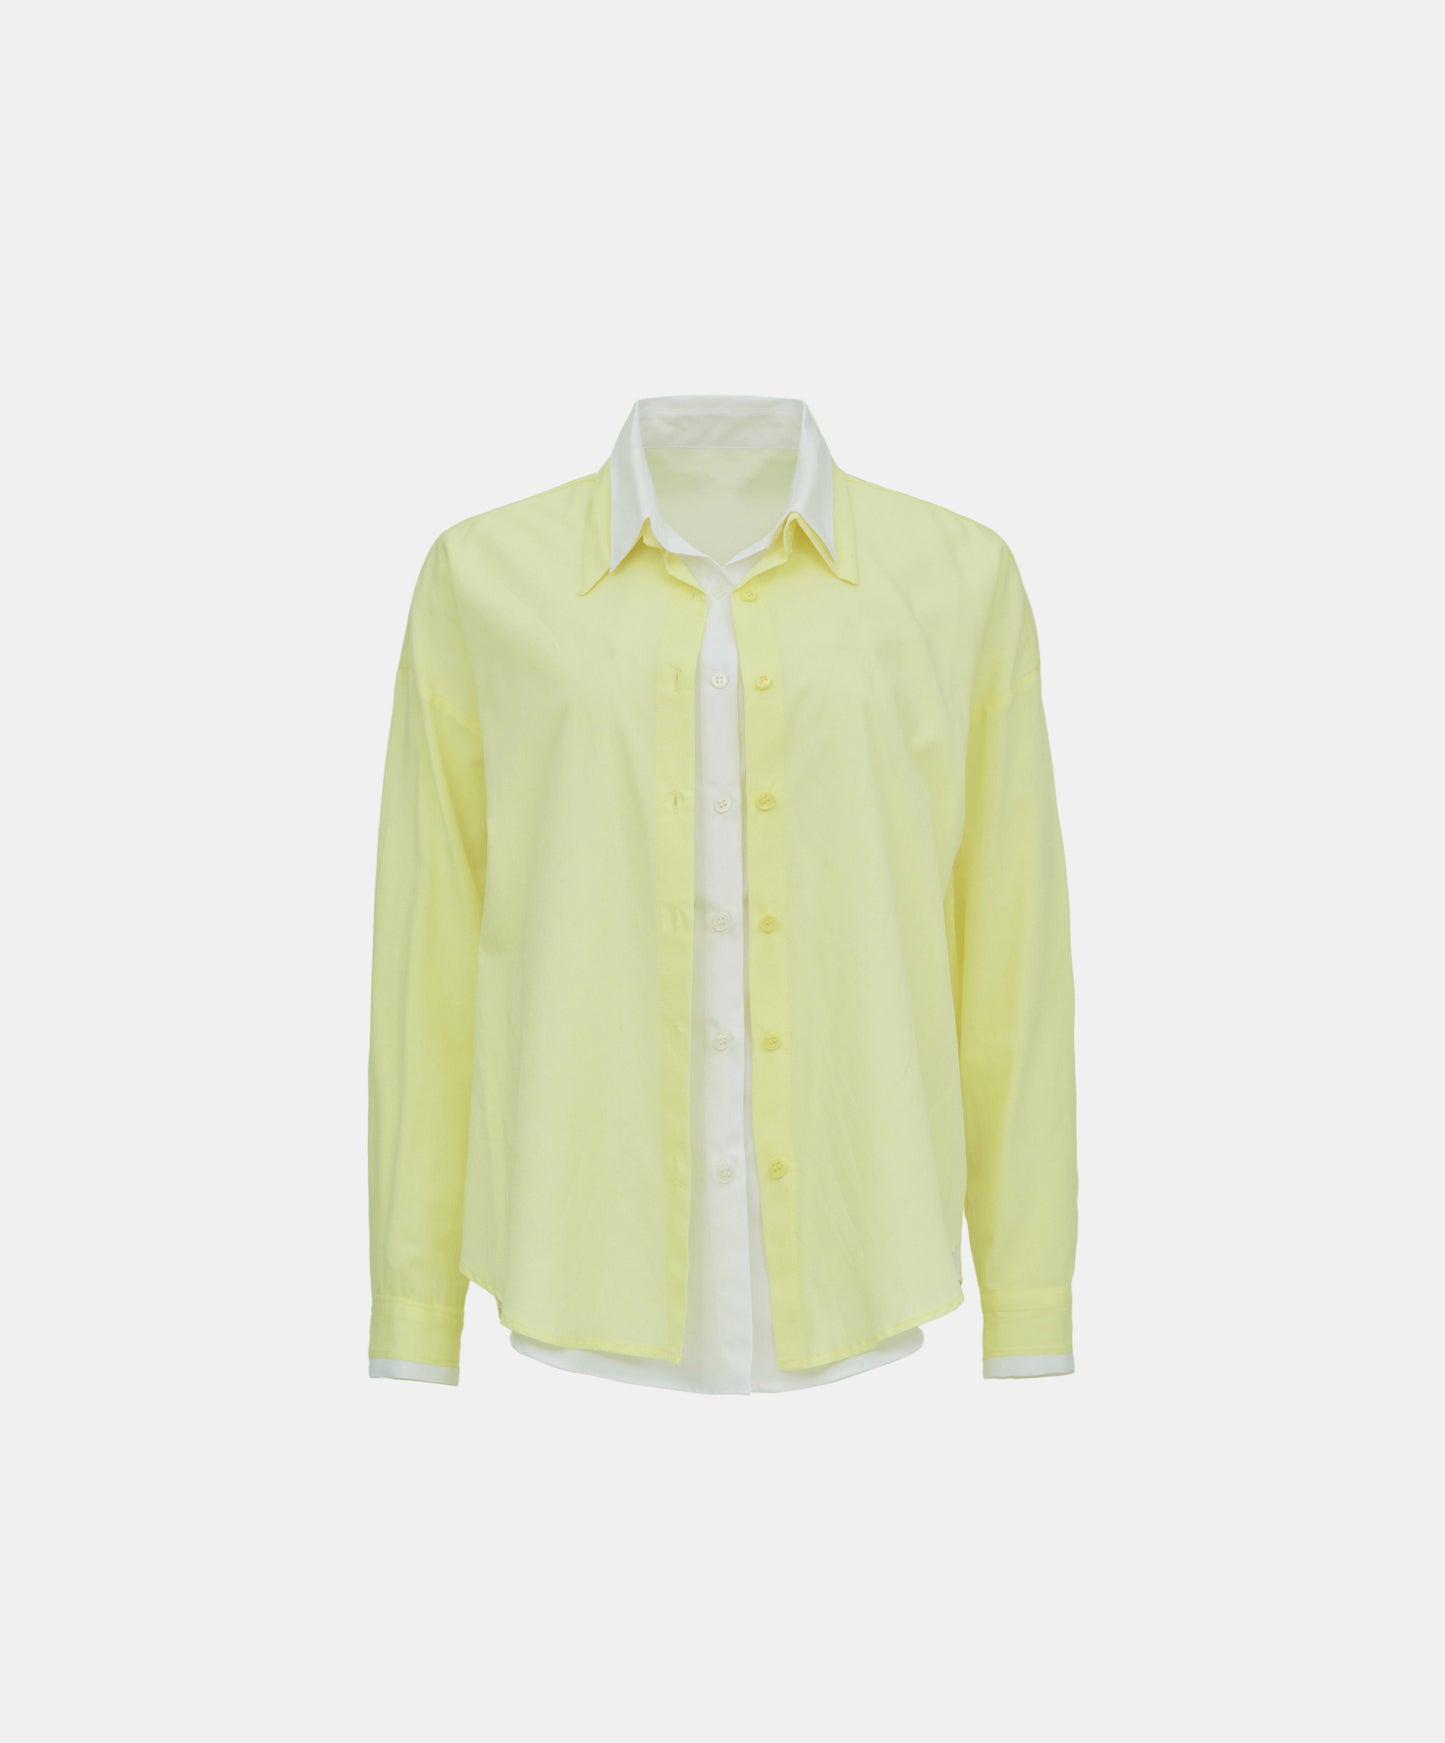 Double-Layered Shirt, Lemon